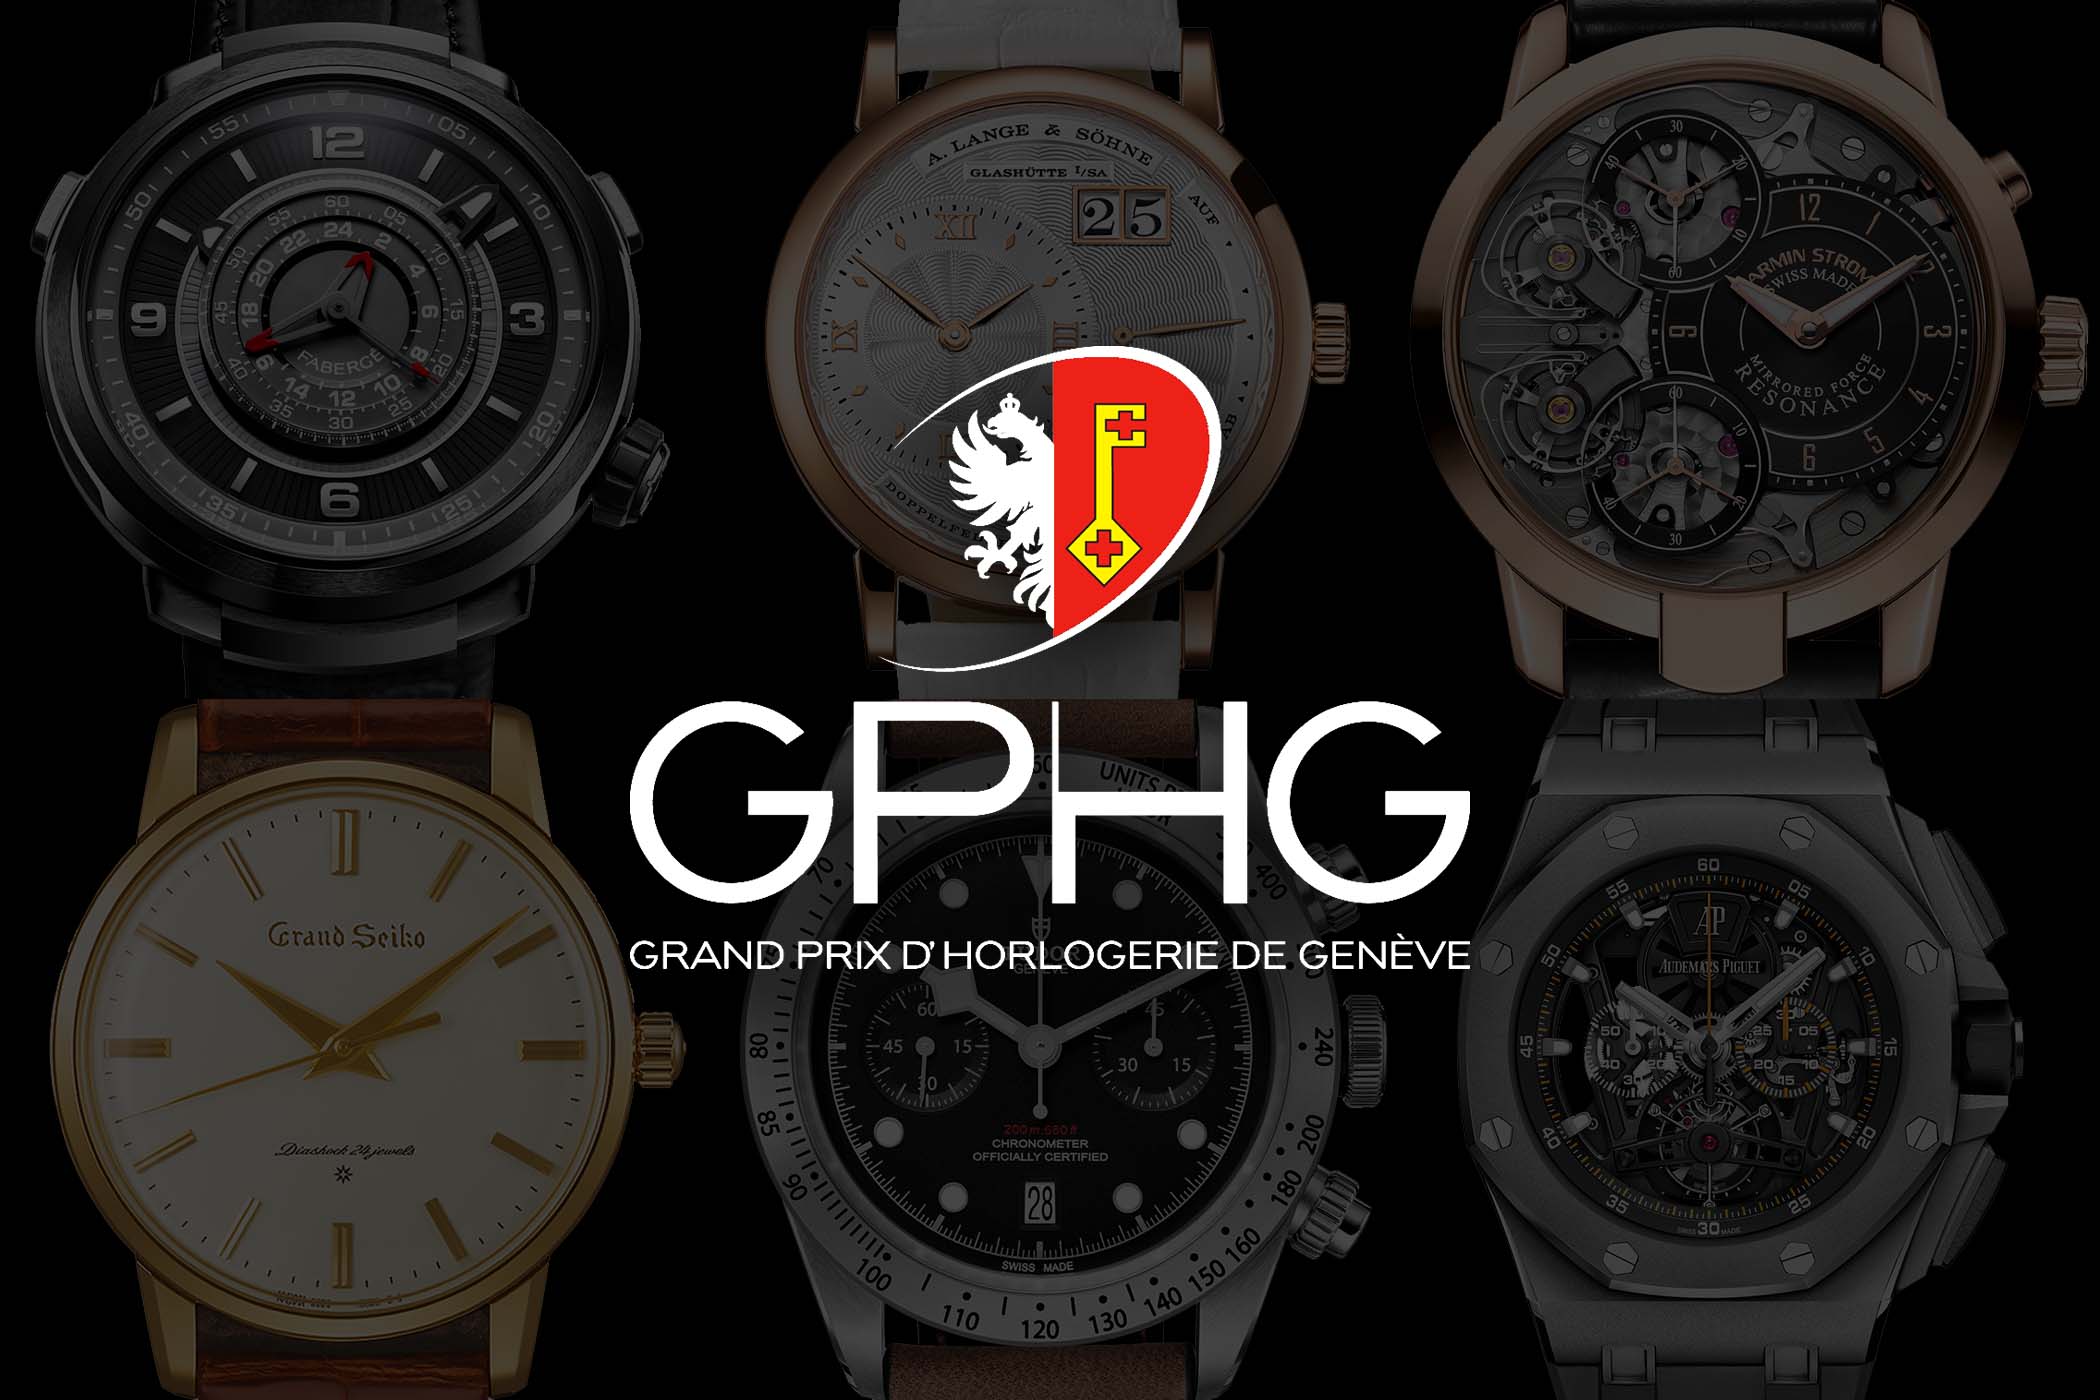 GPHG 2017 grand prix horlogerie de Geneve - Finalists announced